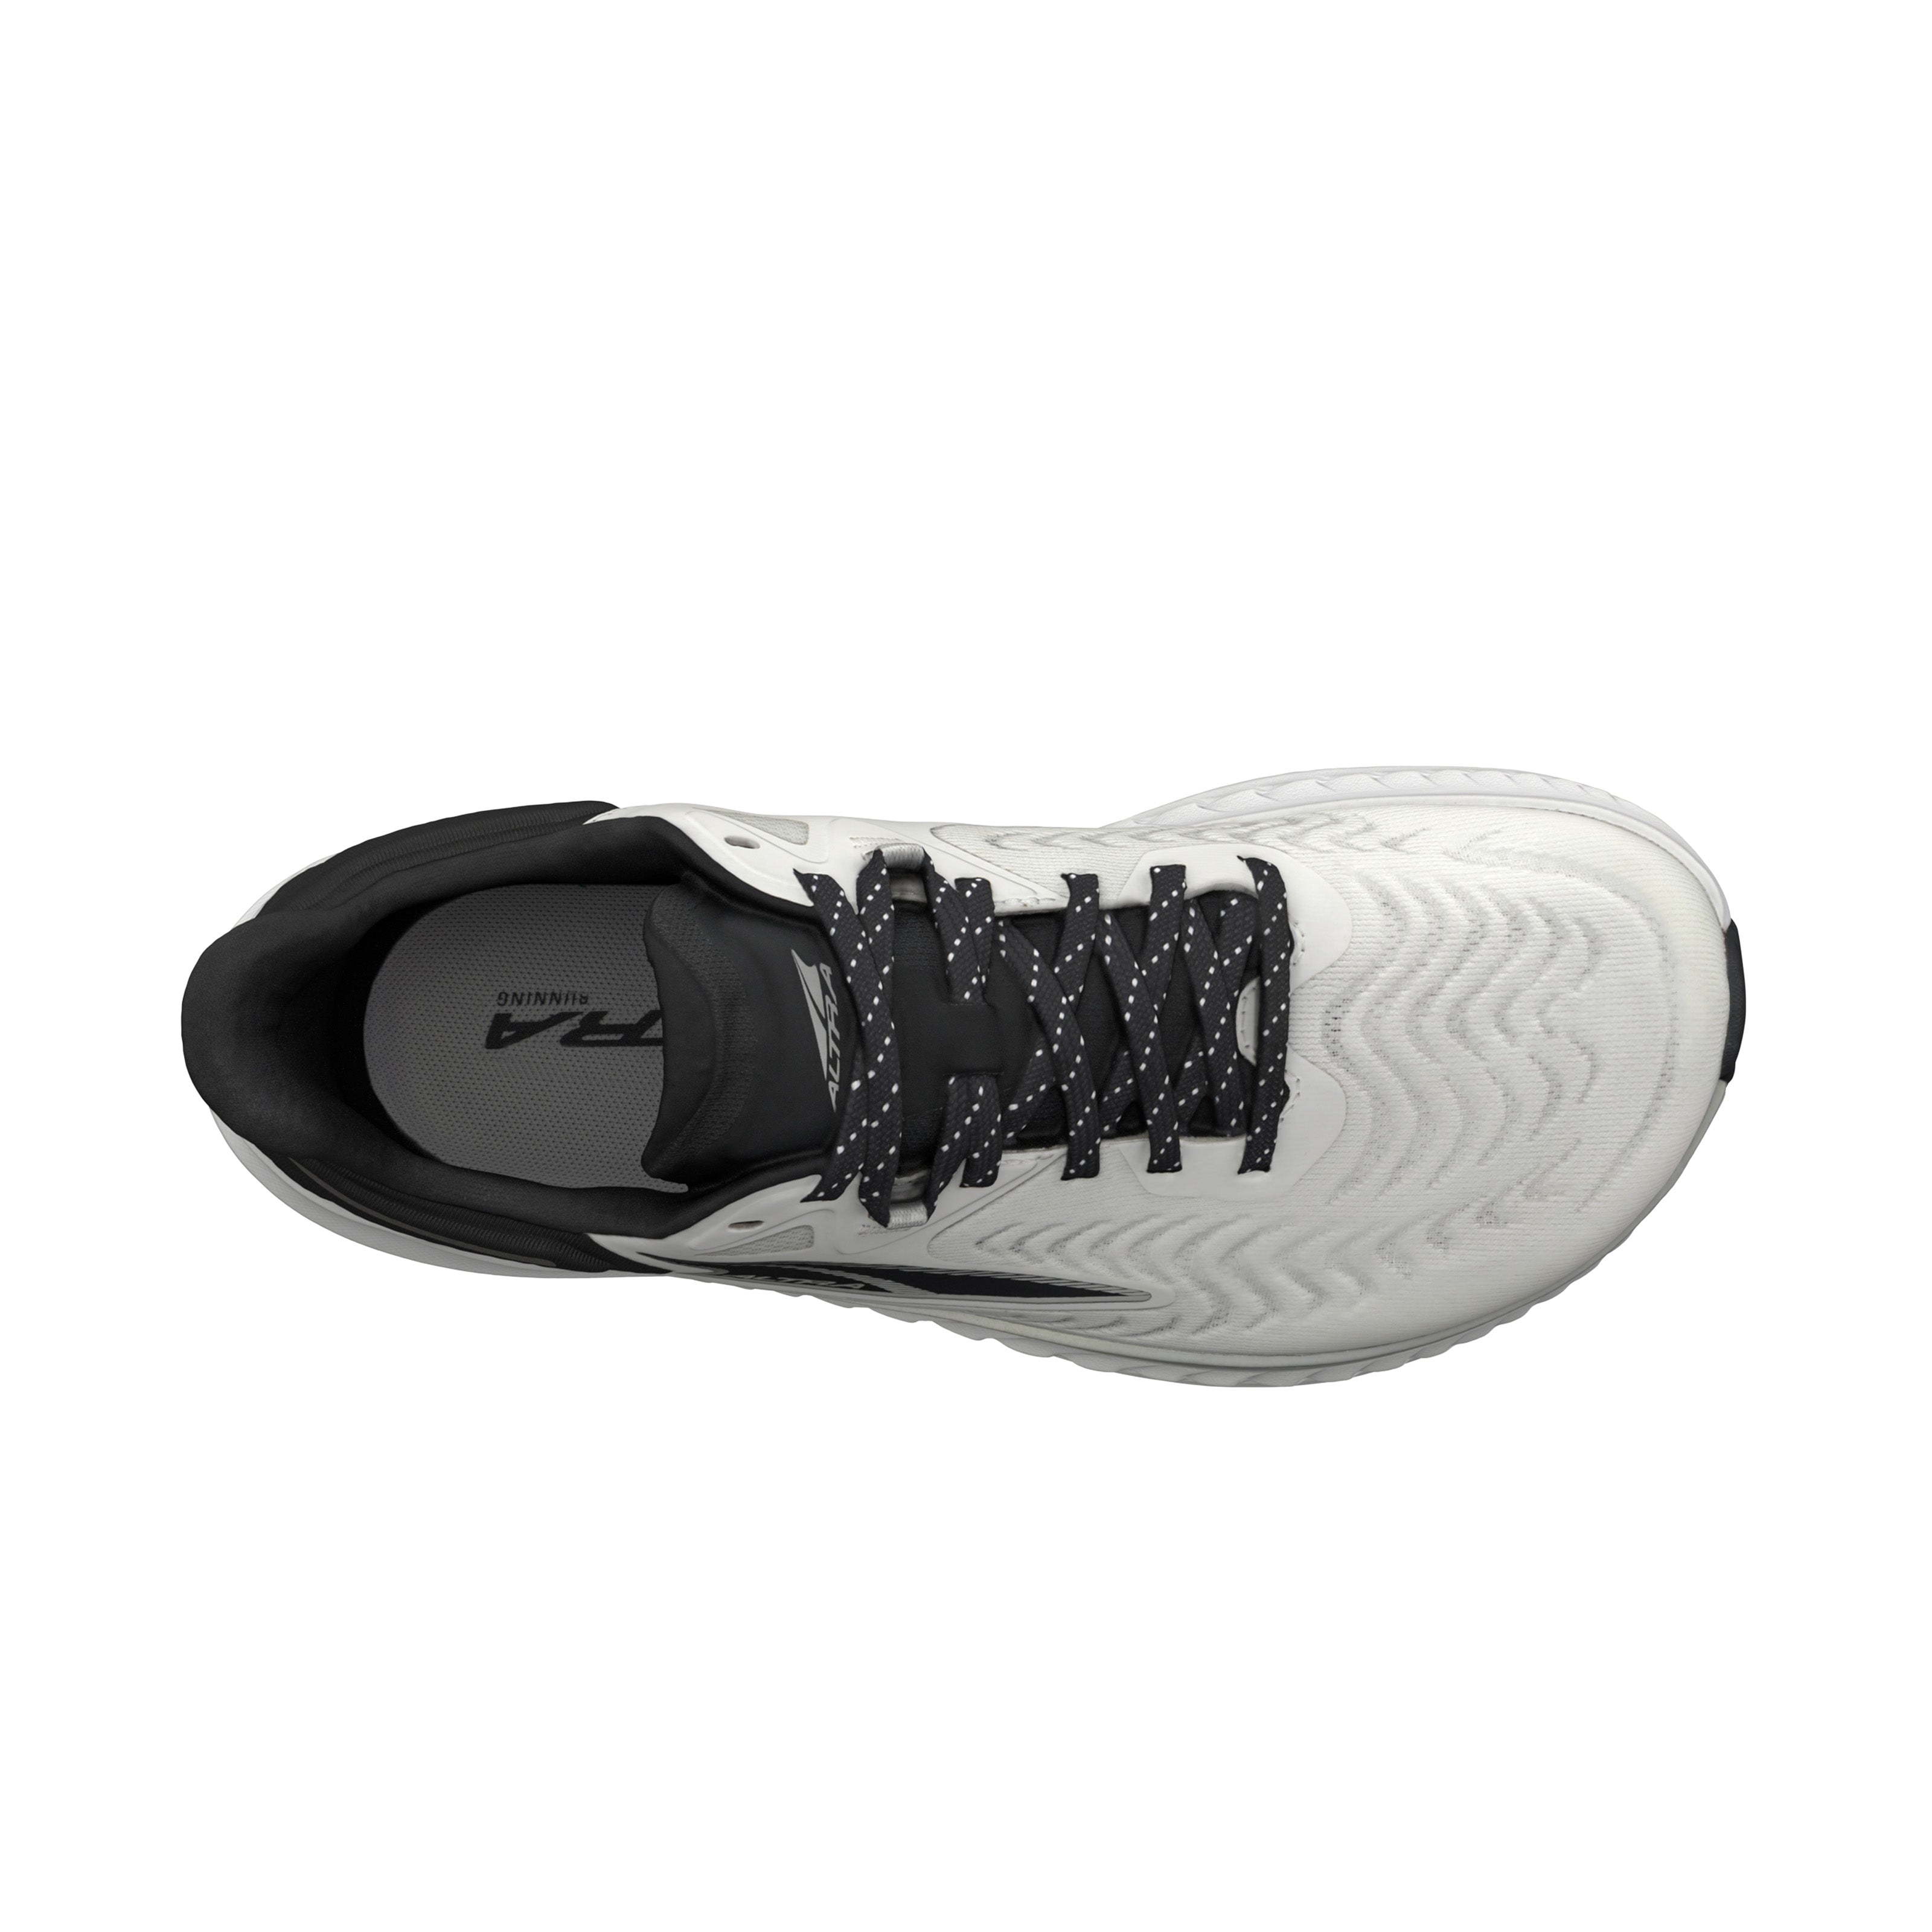 Altra Women's Torin 7 Running Shoes - White/Black